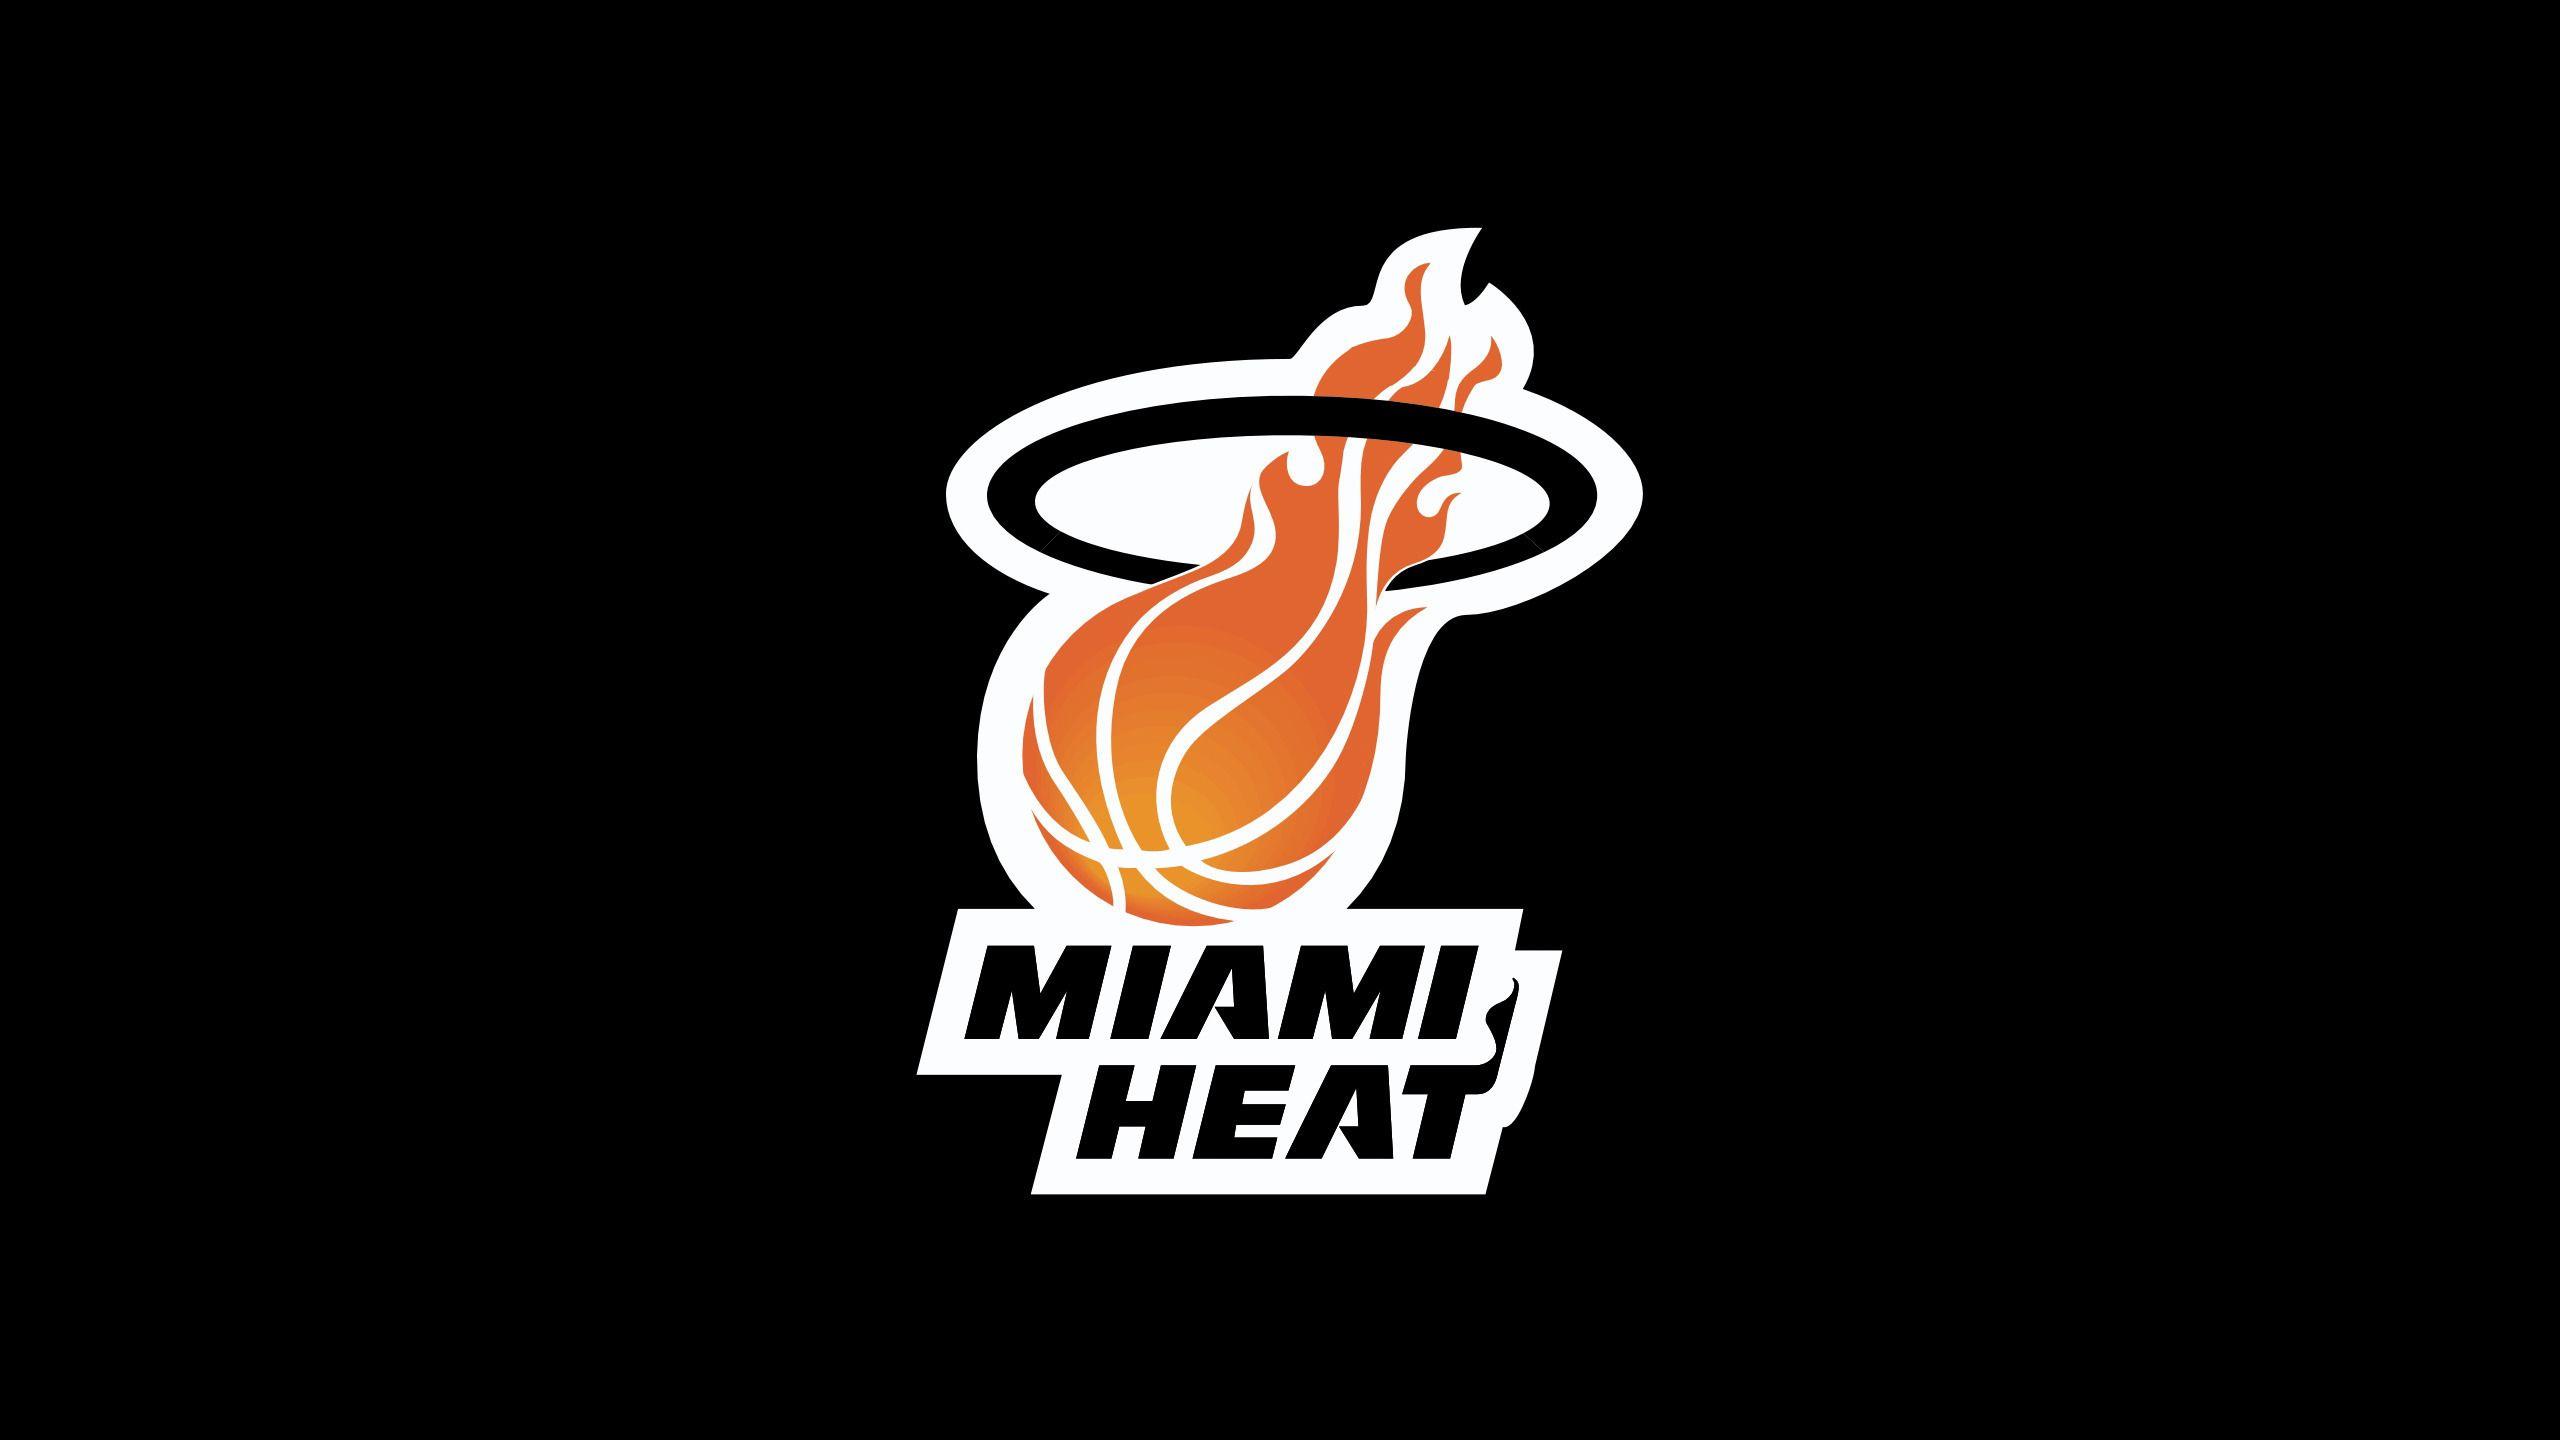 NBA Miami Heat Team Logo Black wallpaper HD 2016 in Basketball